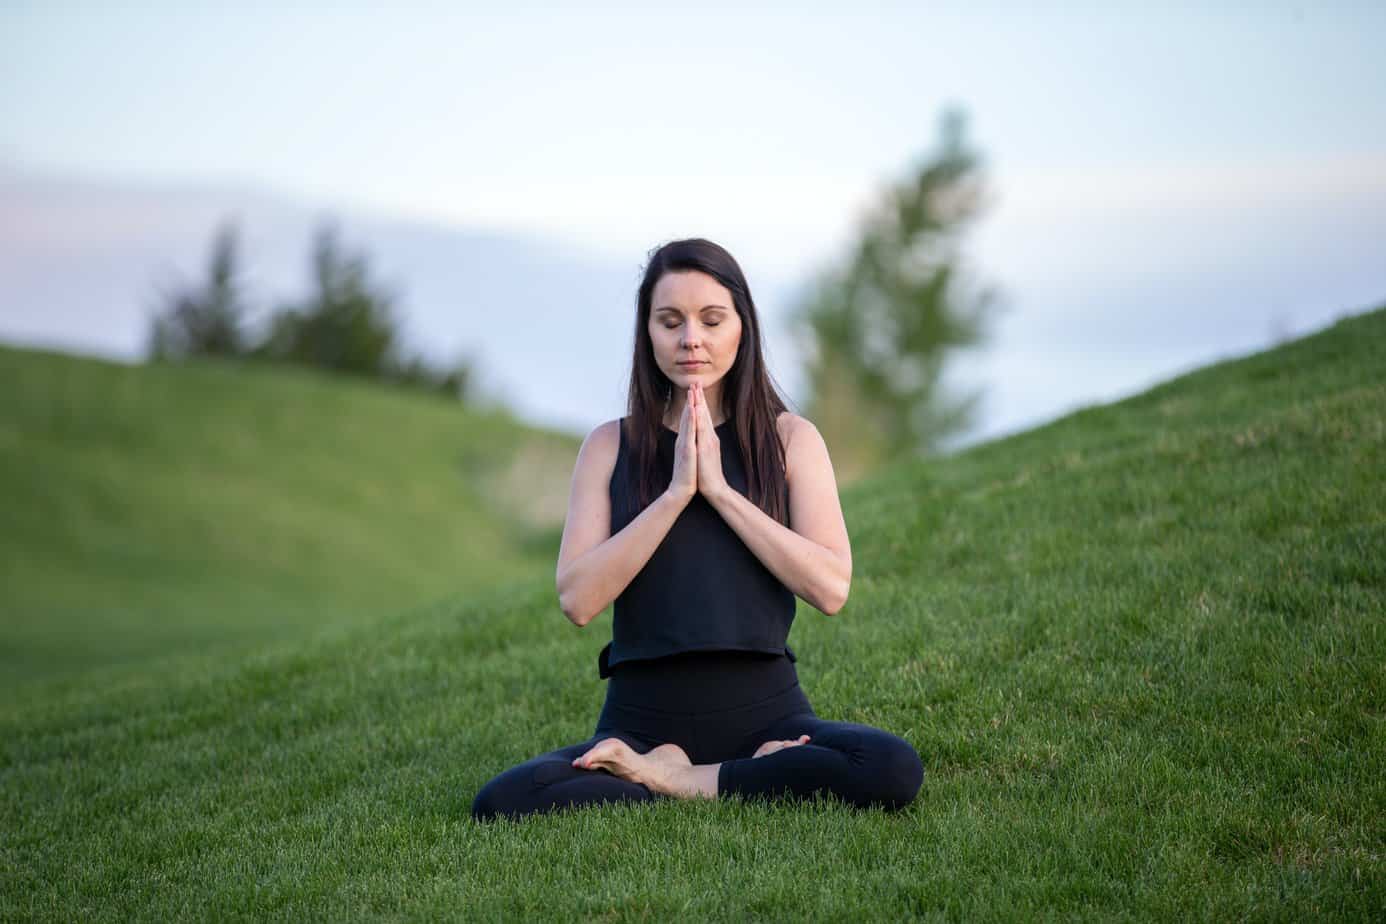 A woman sits on a lawn, meditating.